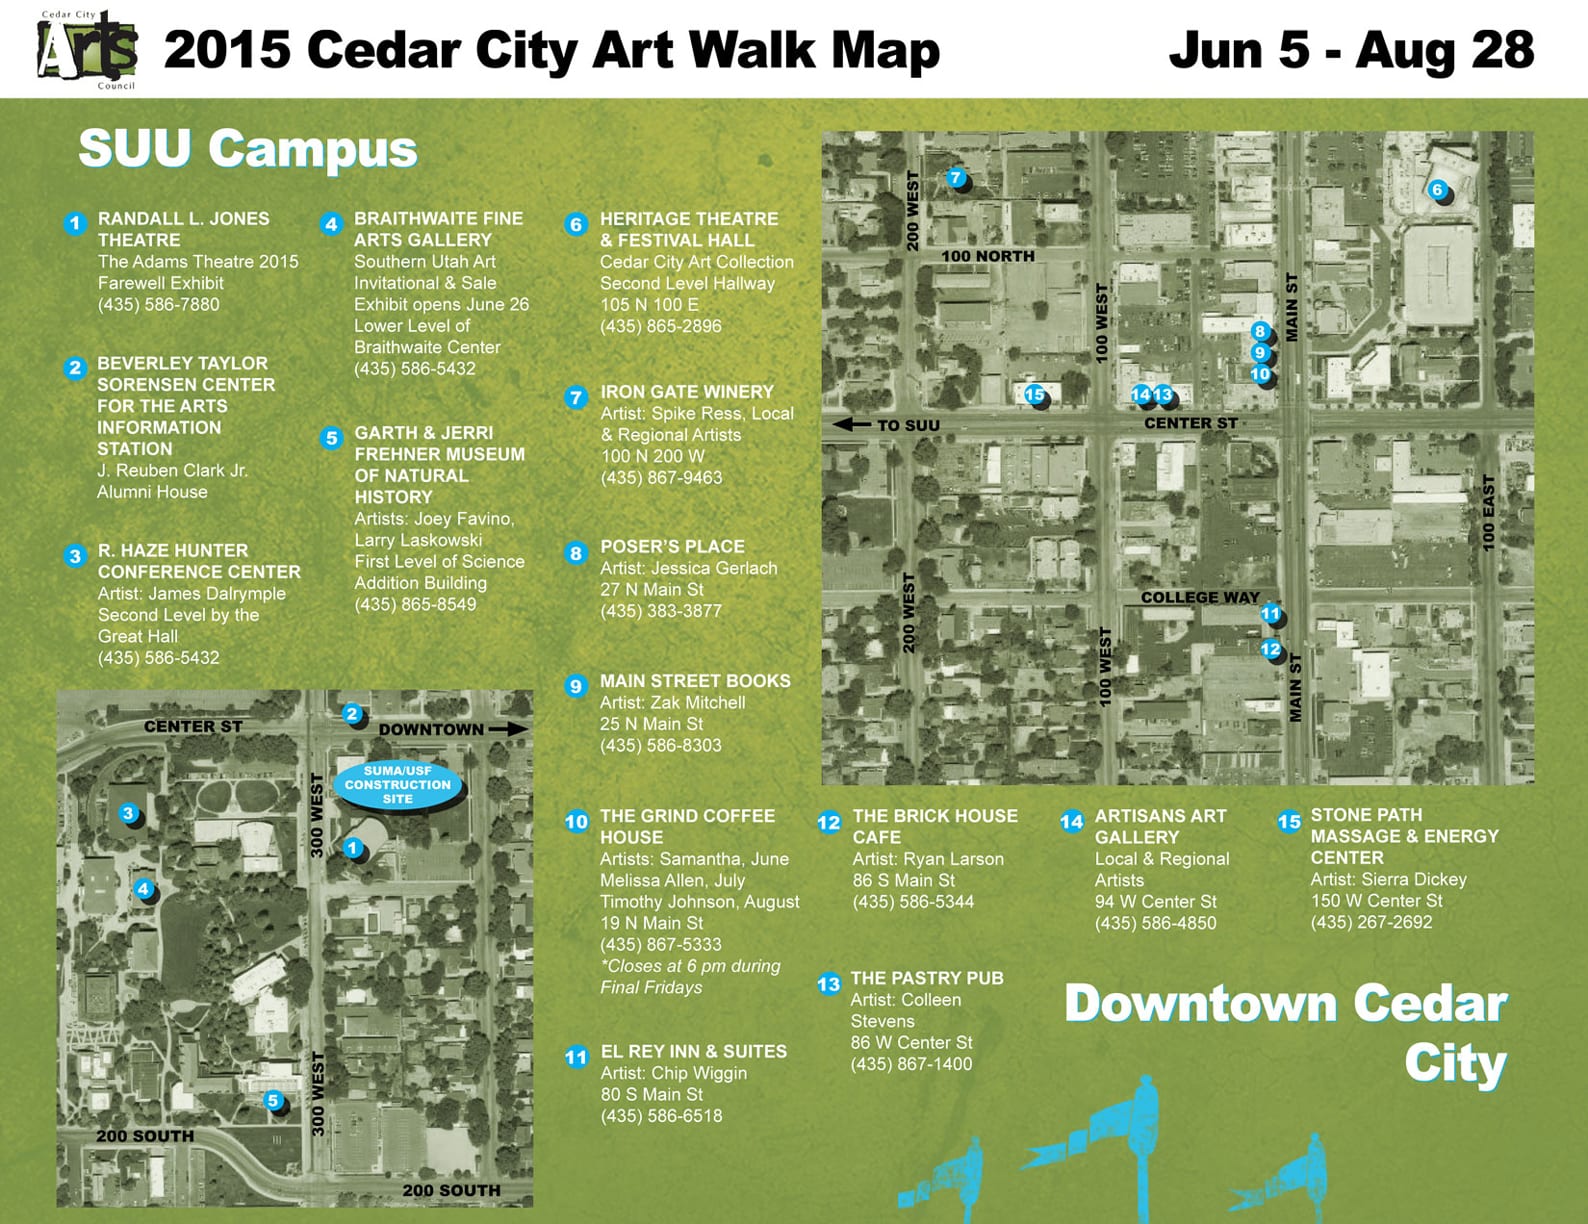 July Cedar City Art Walk Final Friday Gallery Stroll and new stamp card program